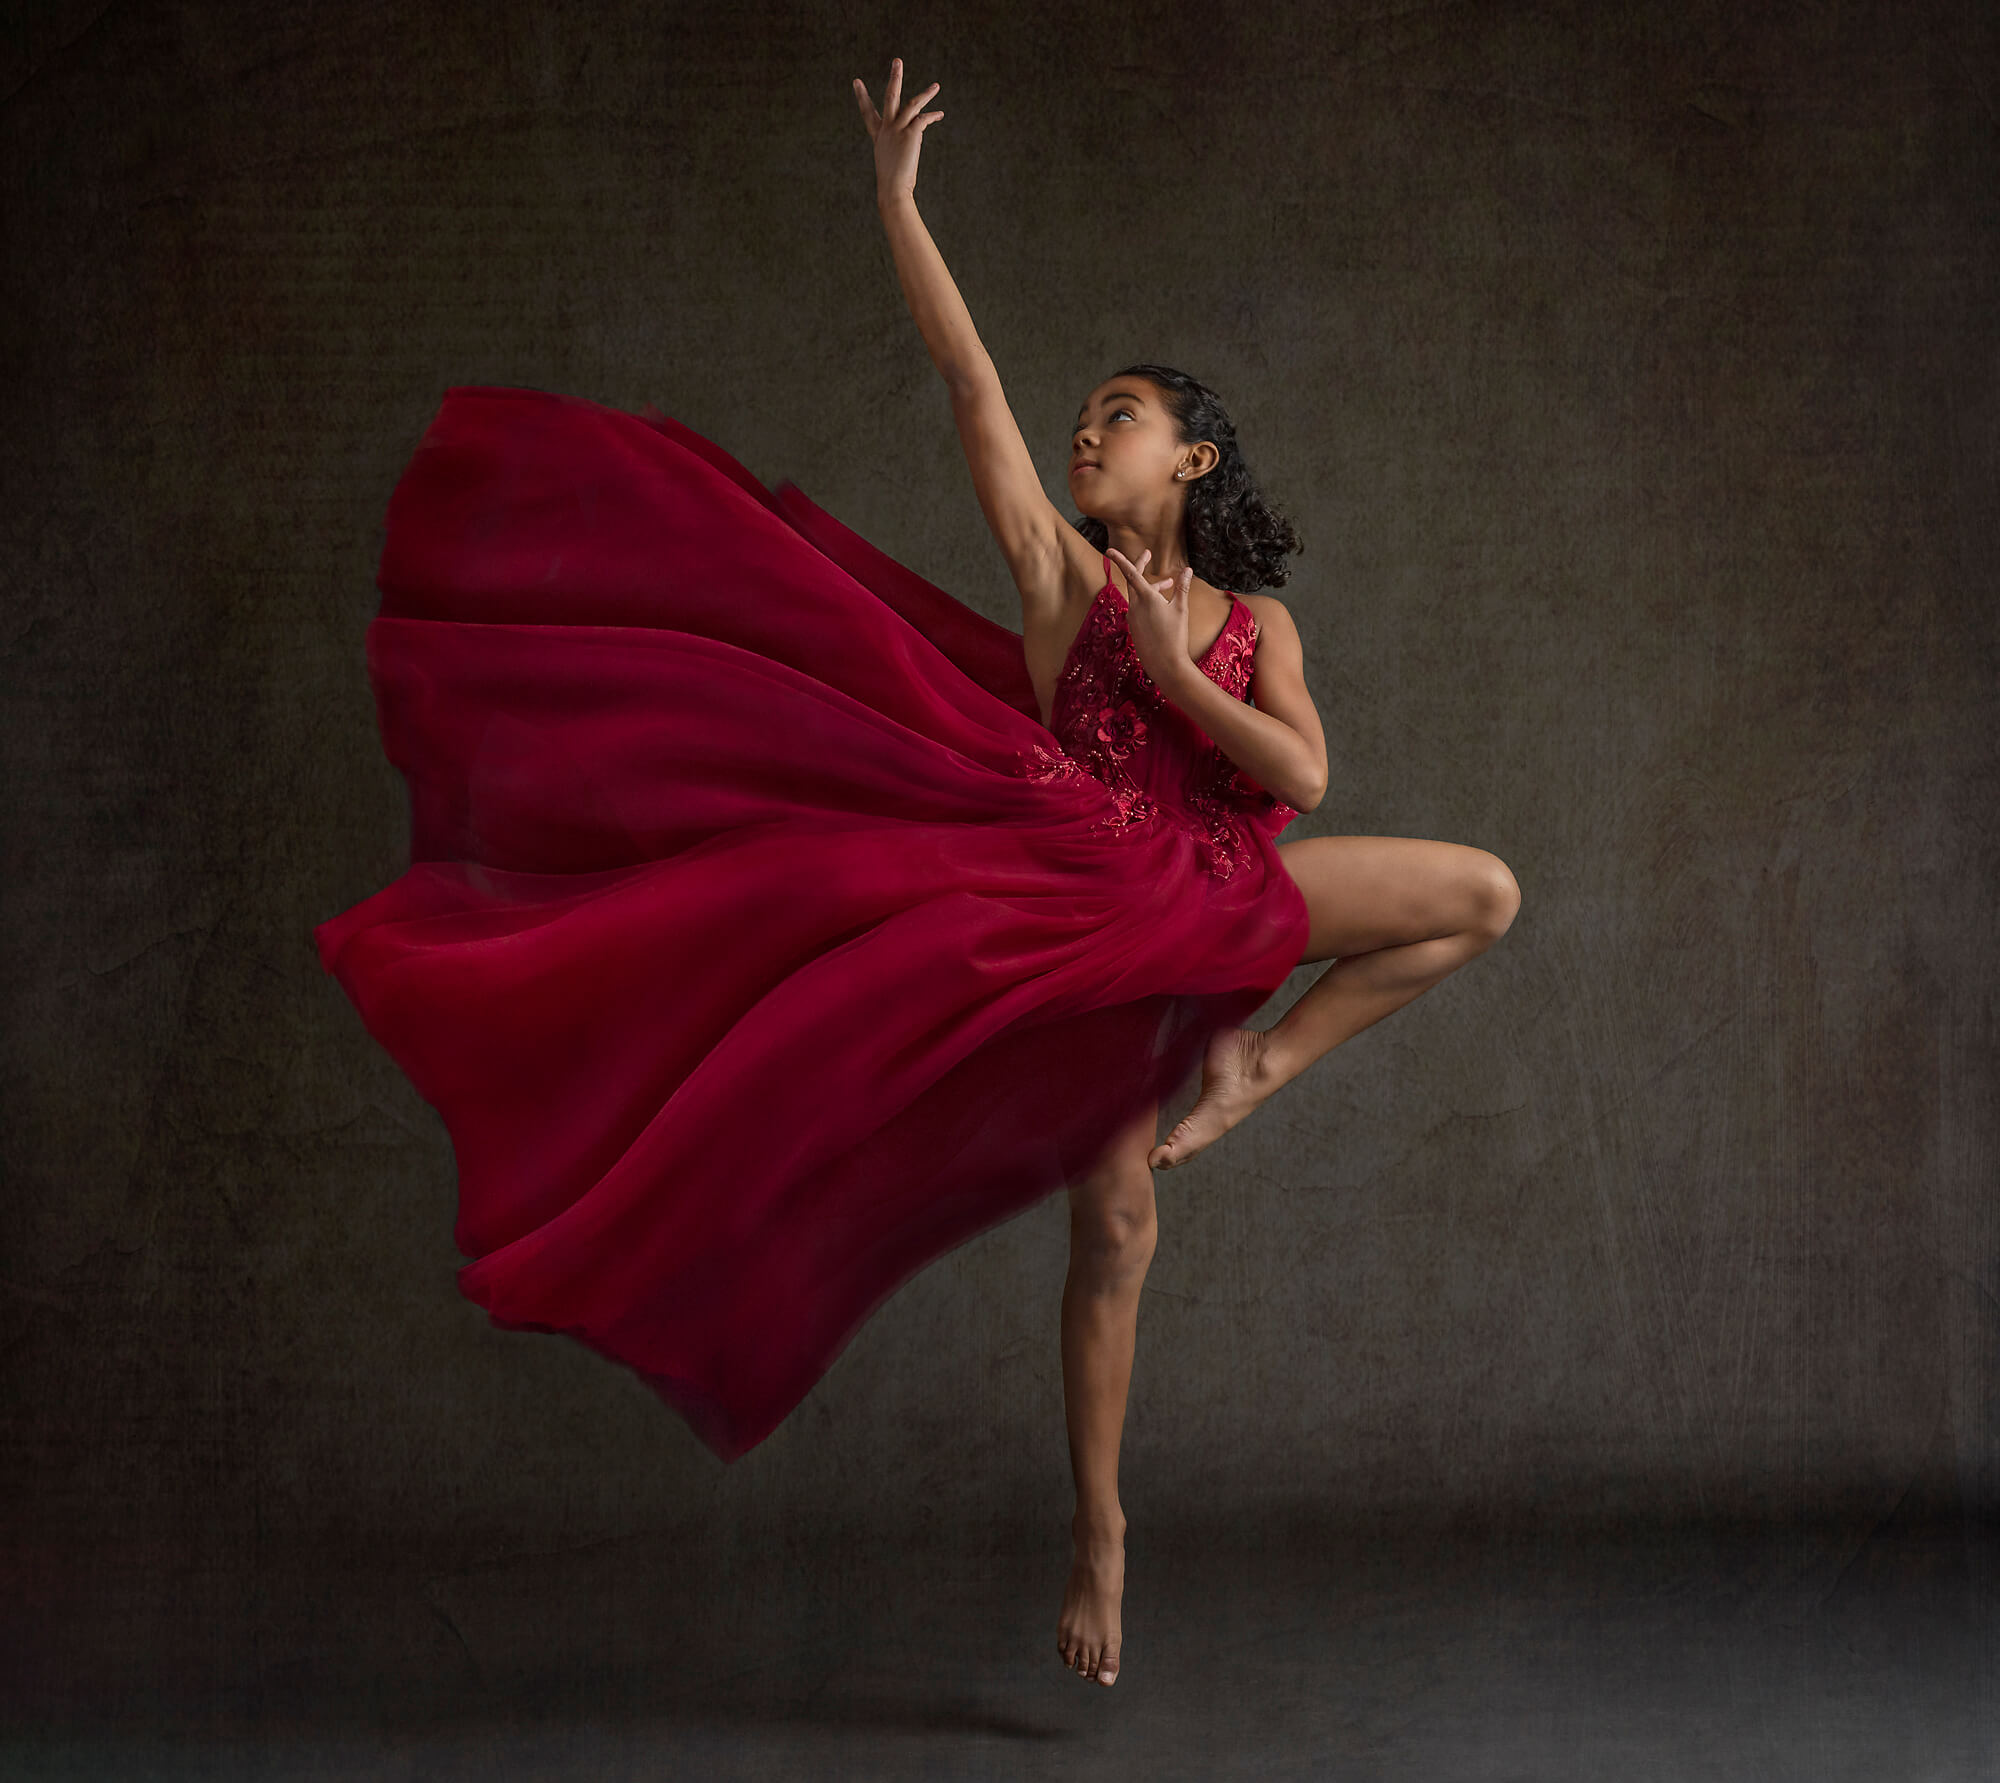 Dancer in red dress reaching up in Redondo Beach photography studio